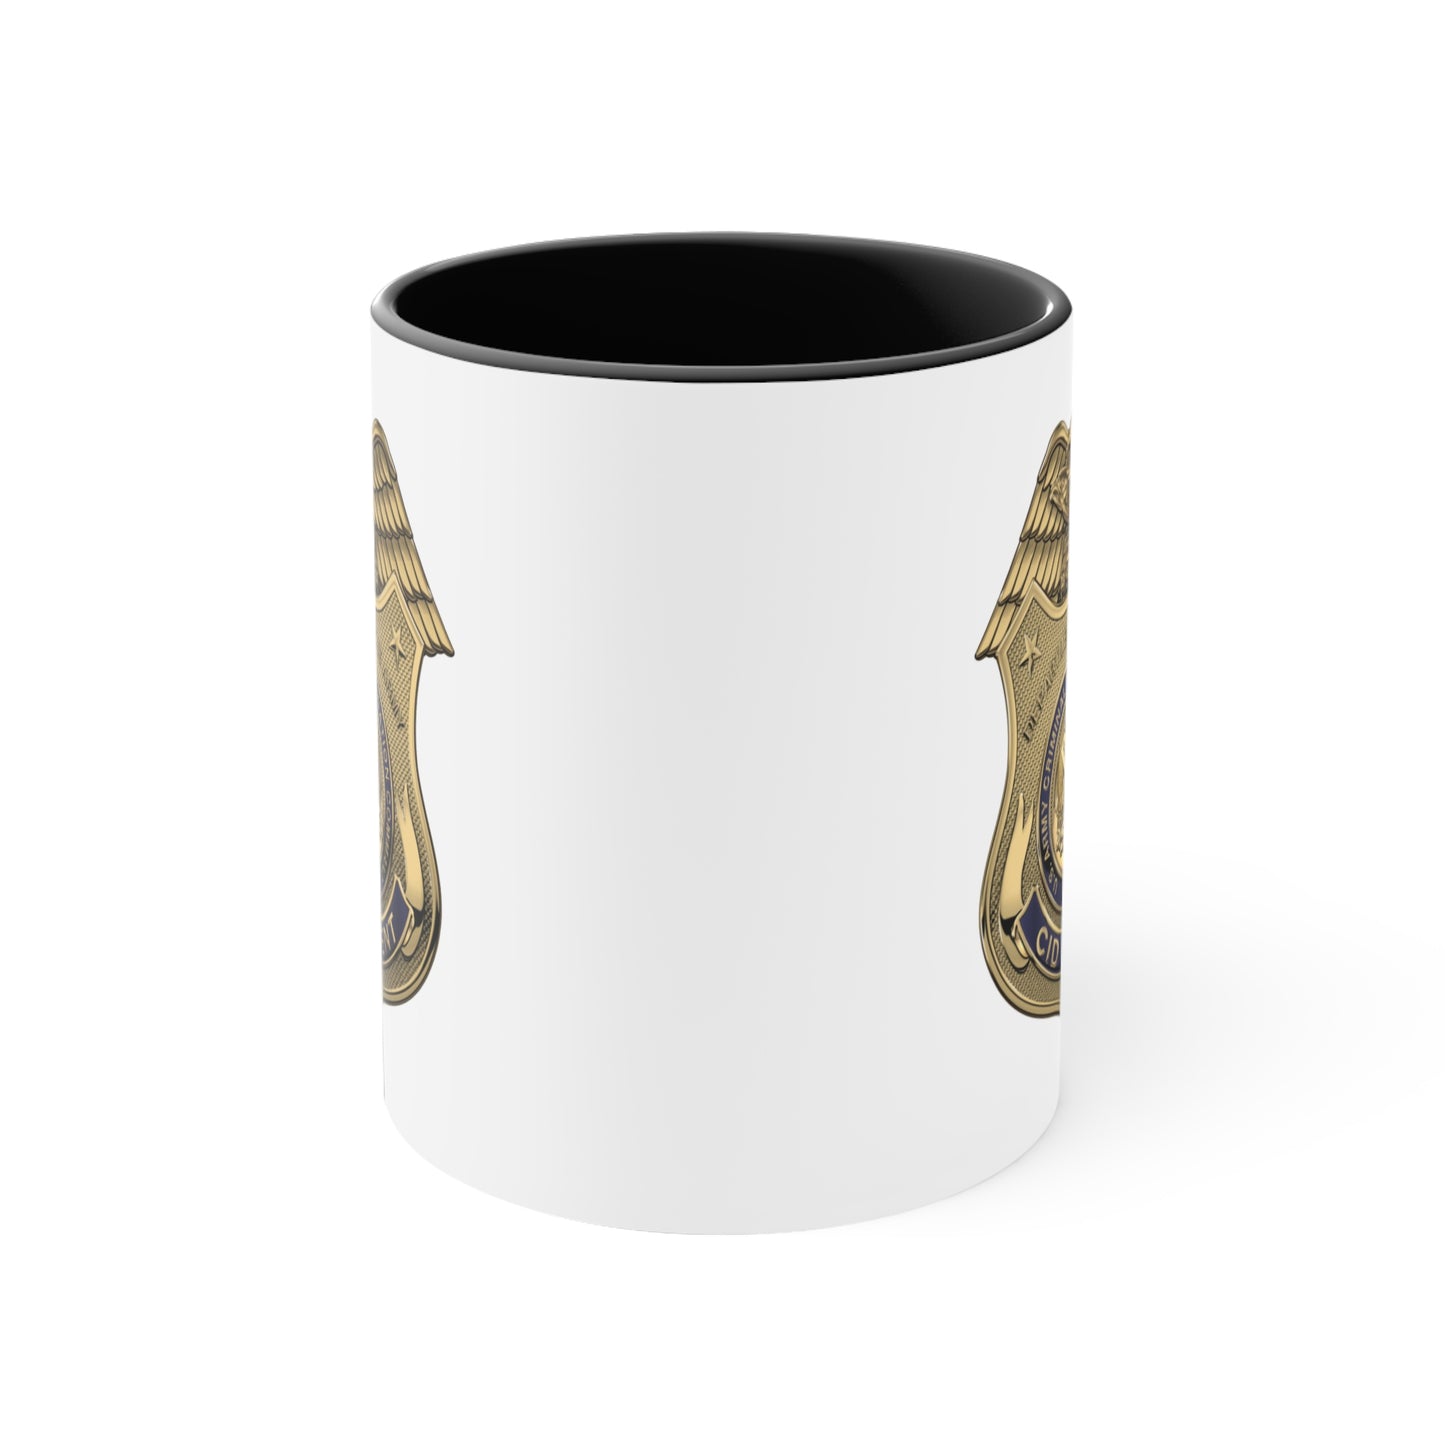 Army CID Agent Badge Coffee Mug - Double Sided Black Accent White Ceramic 11oz by TheGlassyLass.com